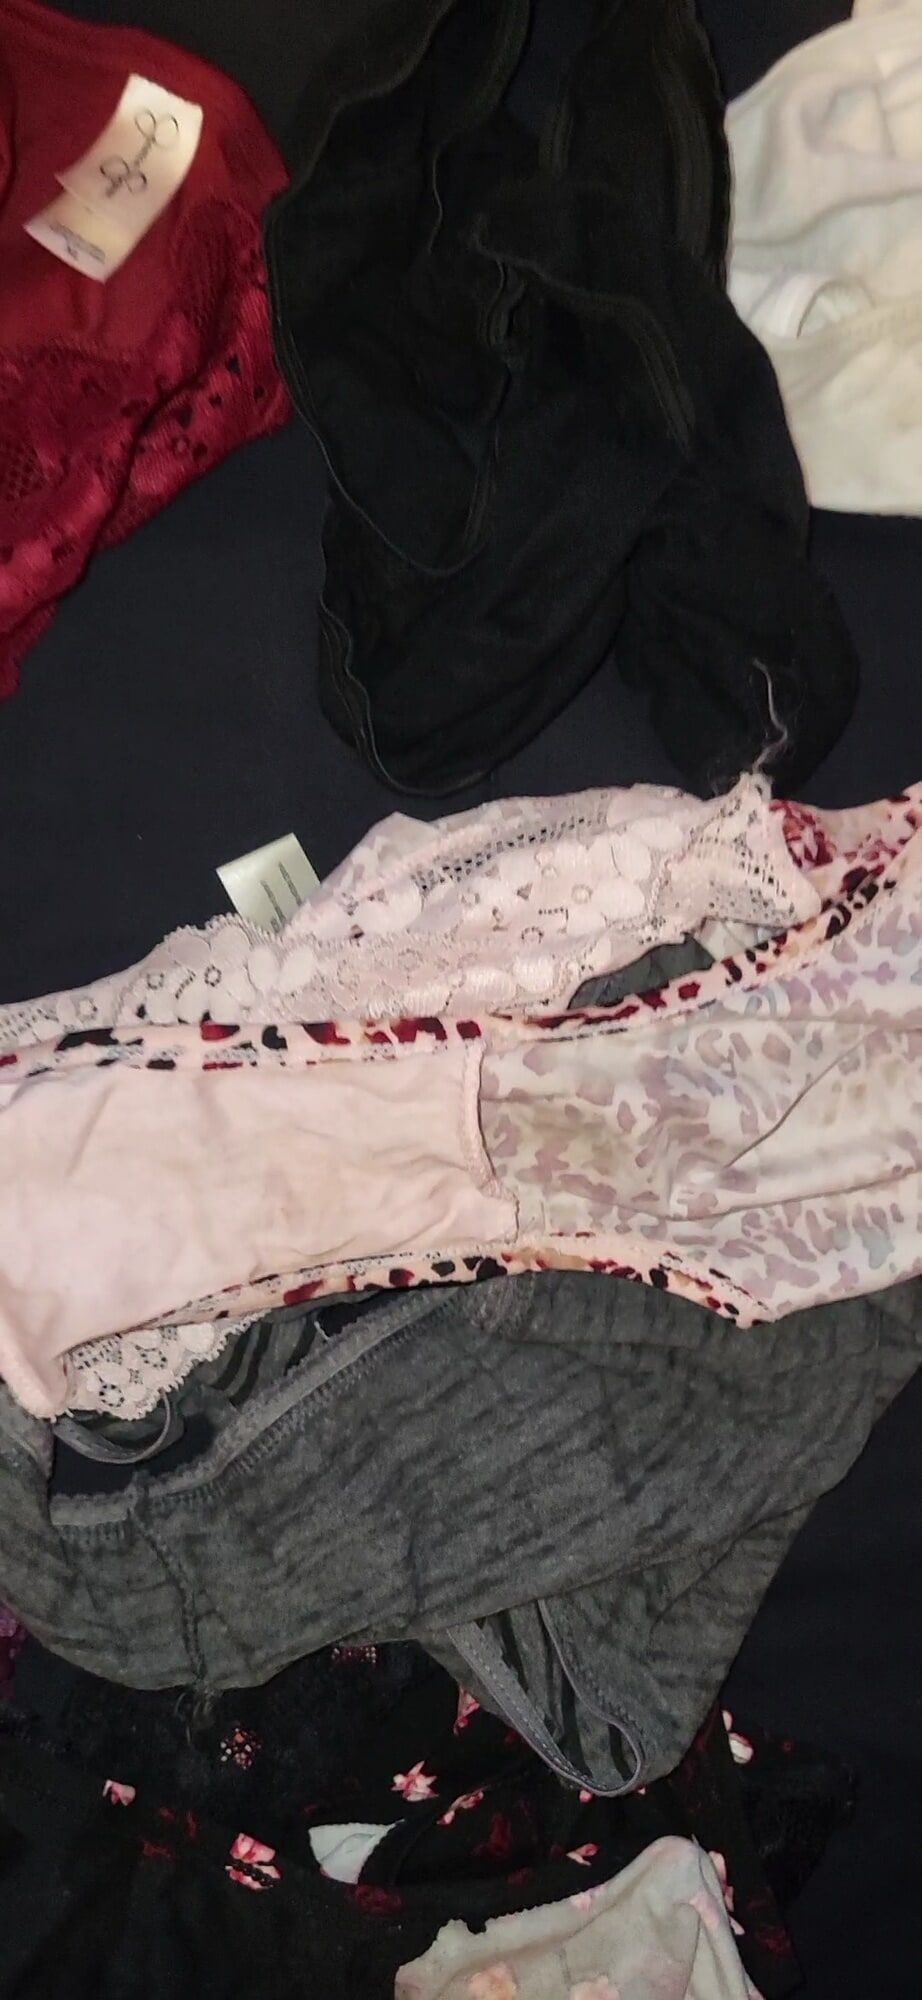 Wife's Dirty Panties Laundry Bag #14